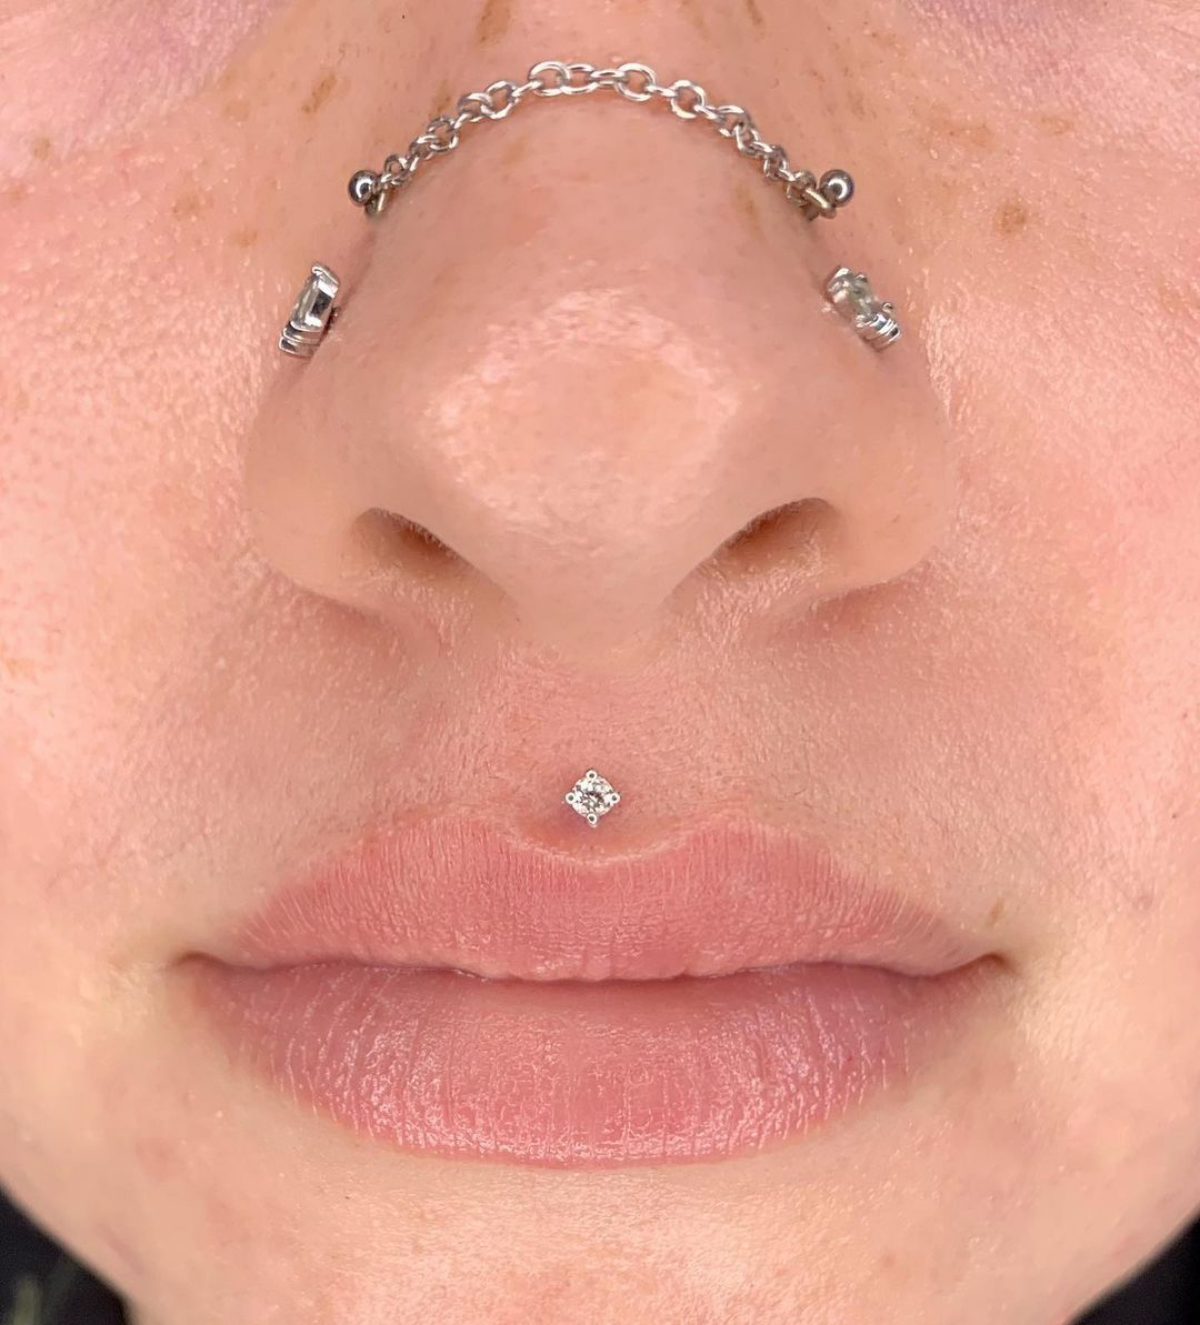 1 medusa piercing design